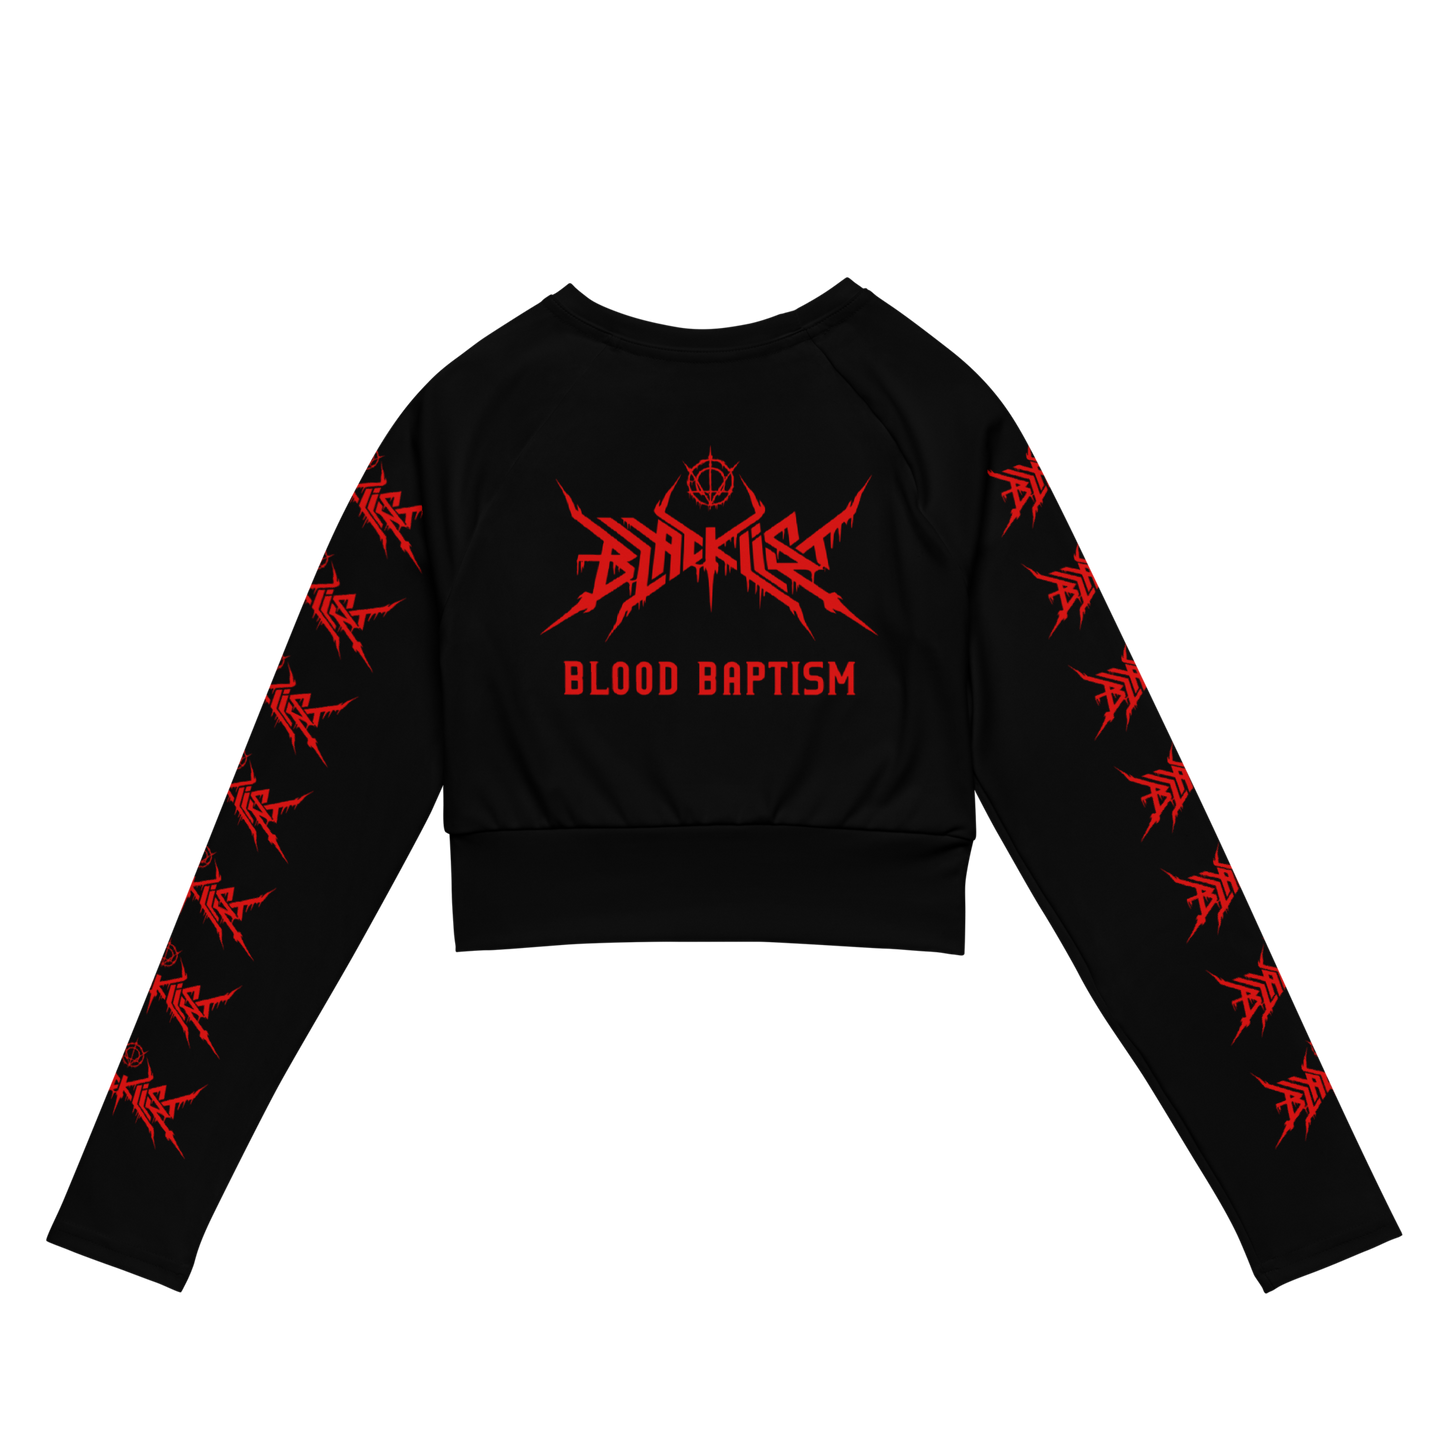 Blacklist (UK) Blood Baptism official long sleeve crop top by Metal Mistress